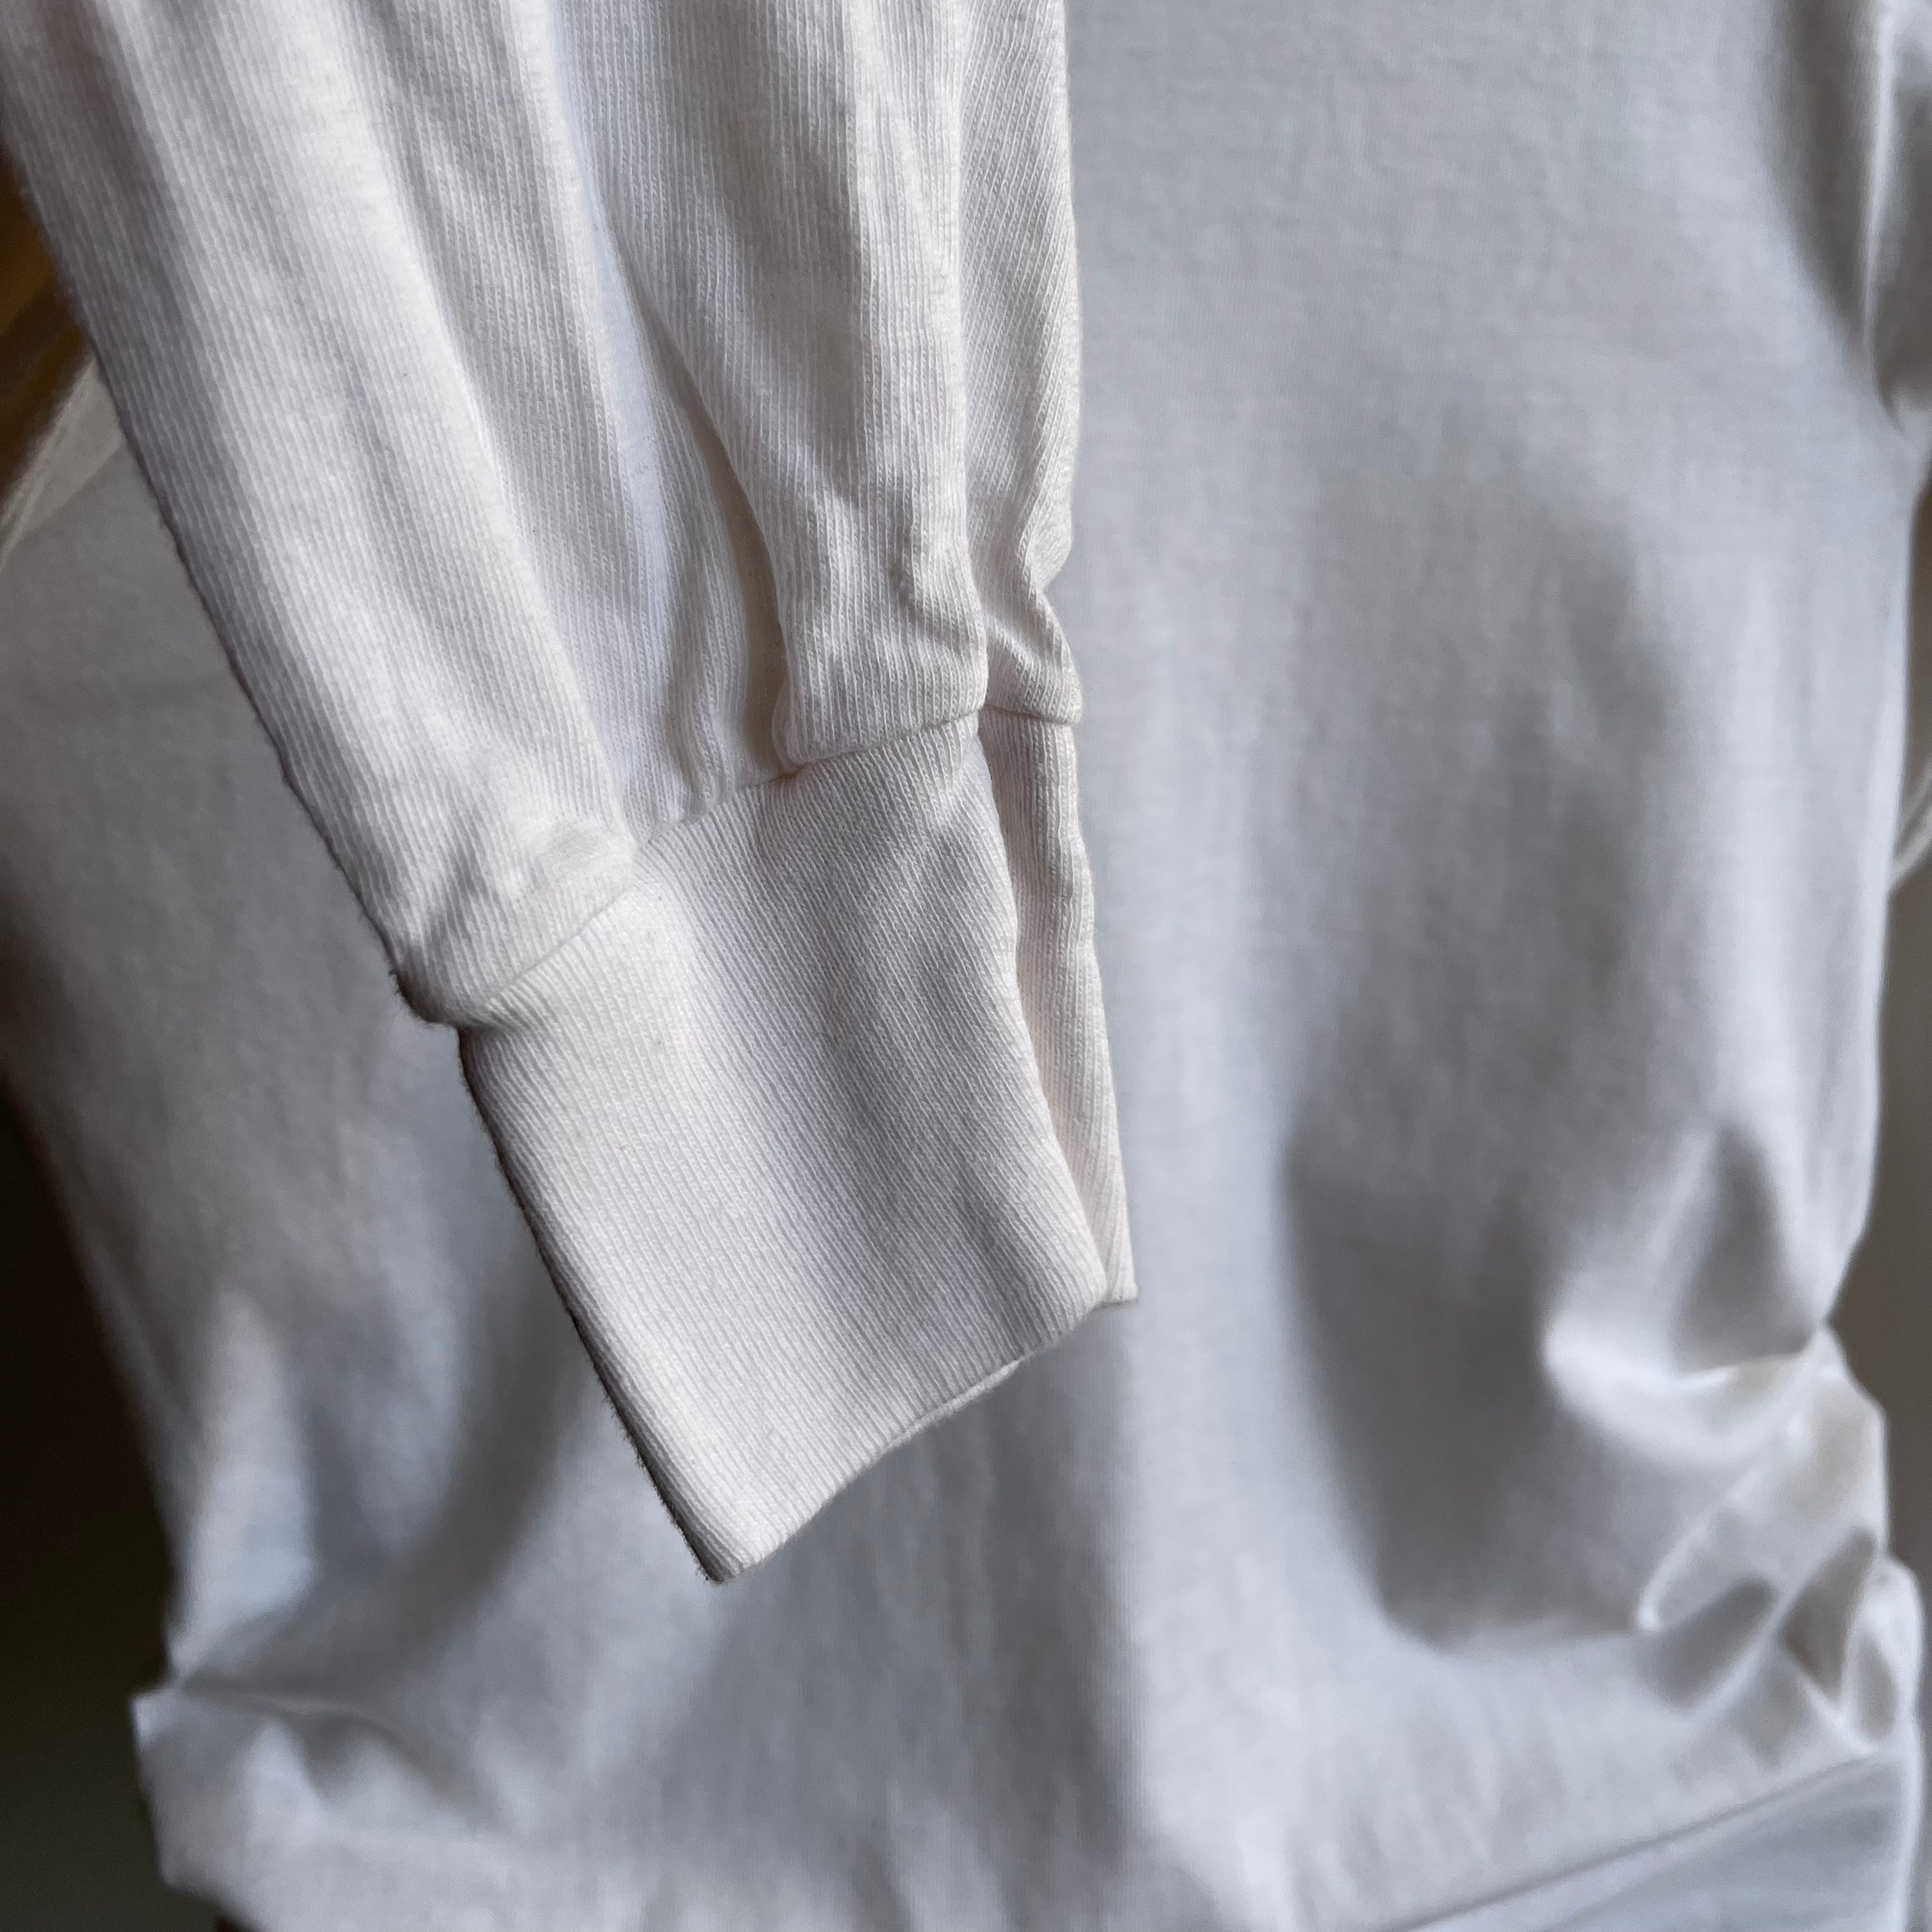 1980s 3D Emblem Blank Long Sleeve T-Shirt